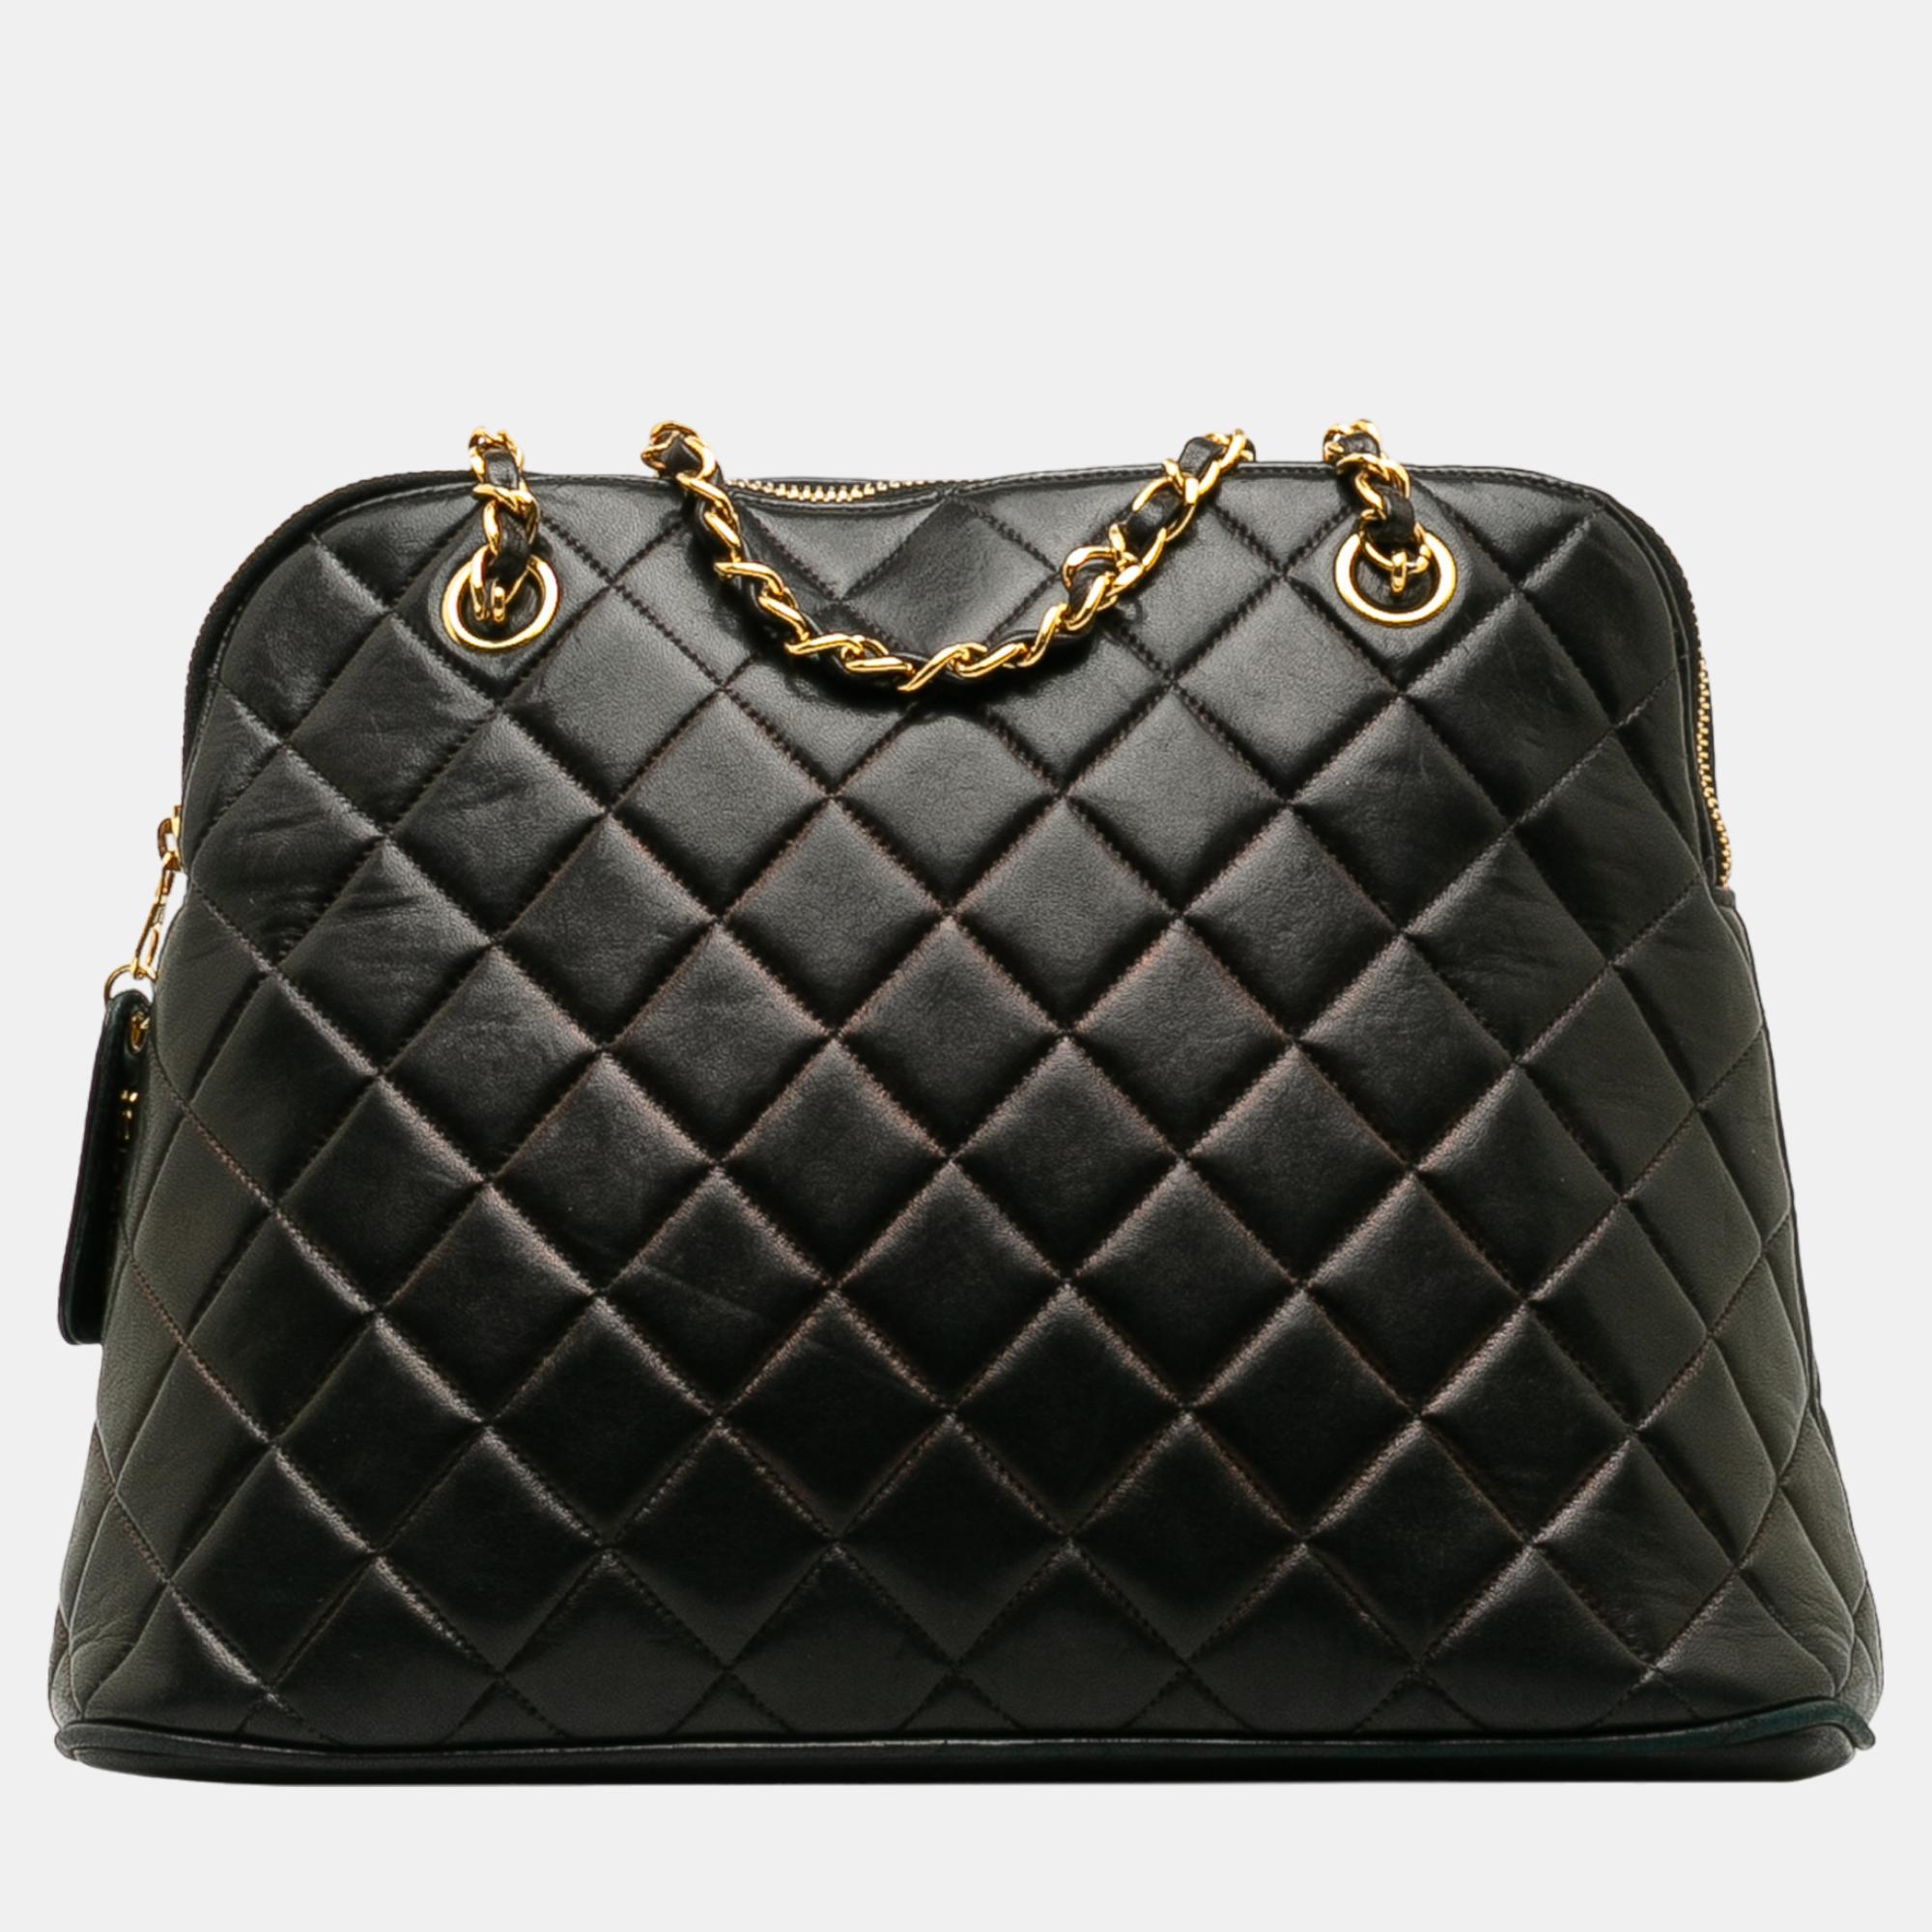 Chanel black quilted lambskin dome shoulder bag